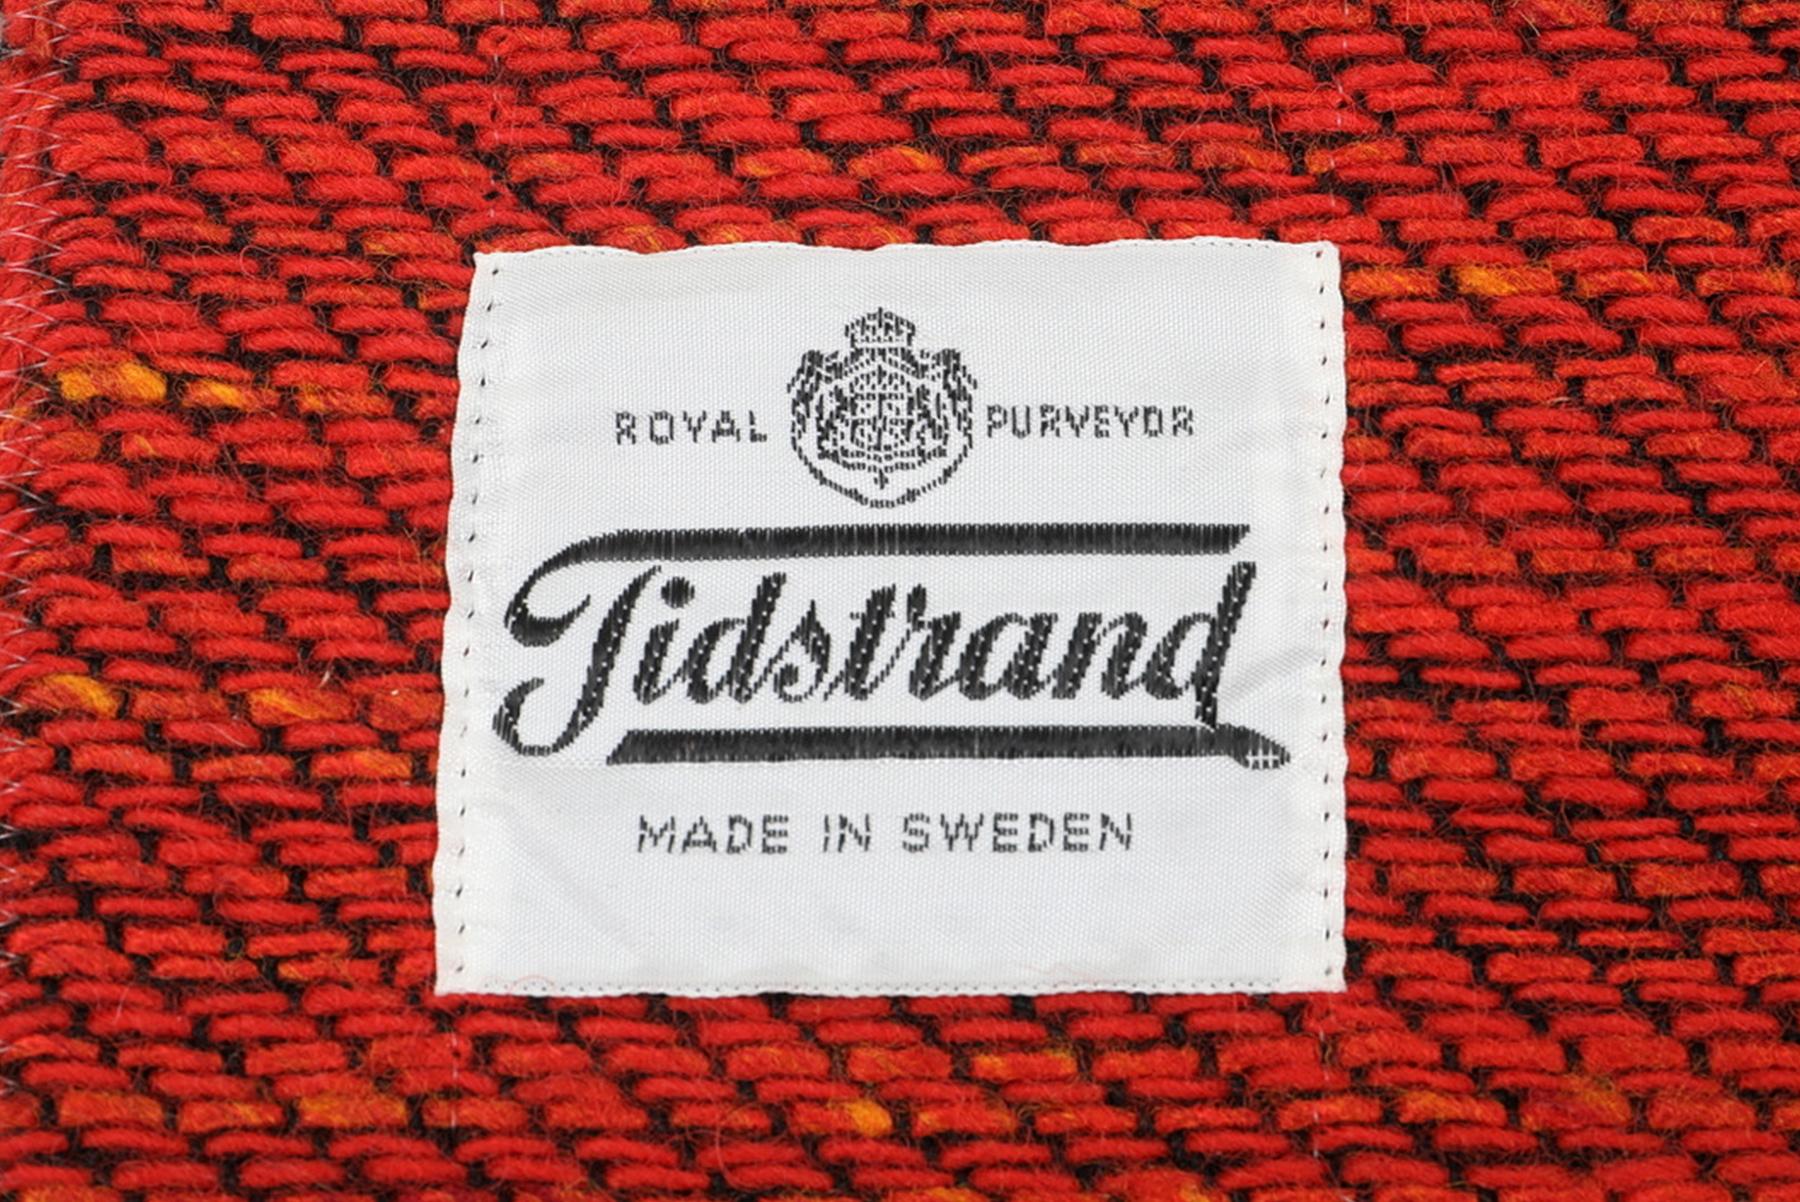 Origin: Sweden
Designer: Unknown
Manufacturer: Tidstrands
Era: 1970s
Materials: Wool
Measurements: 29? wide x 36.5? tall

Condition: In excellent original condition.